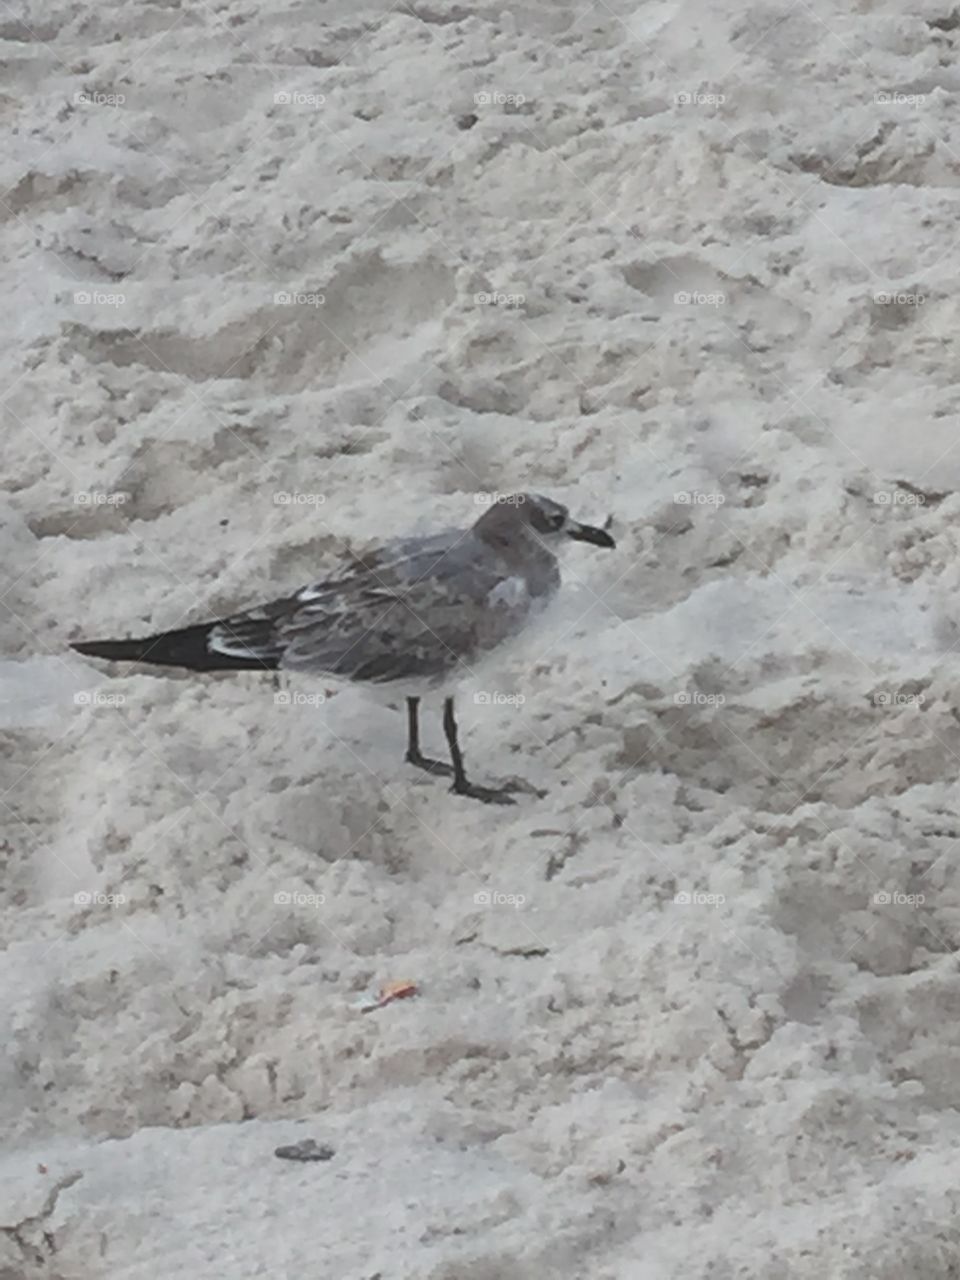 Beach bird 